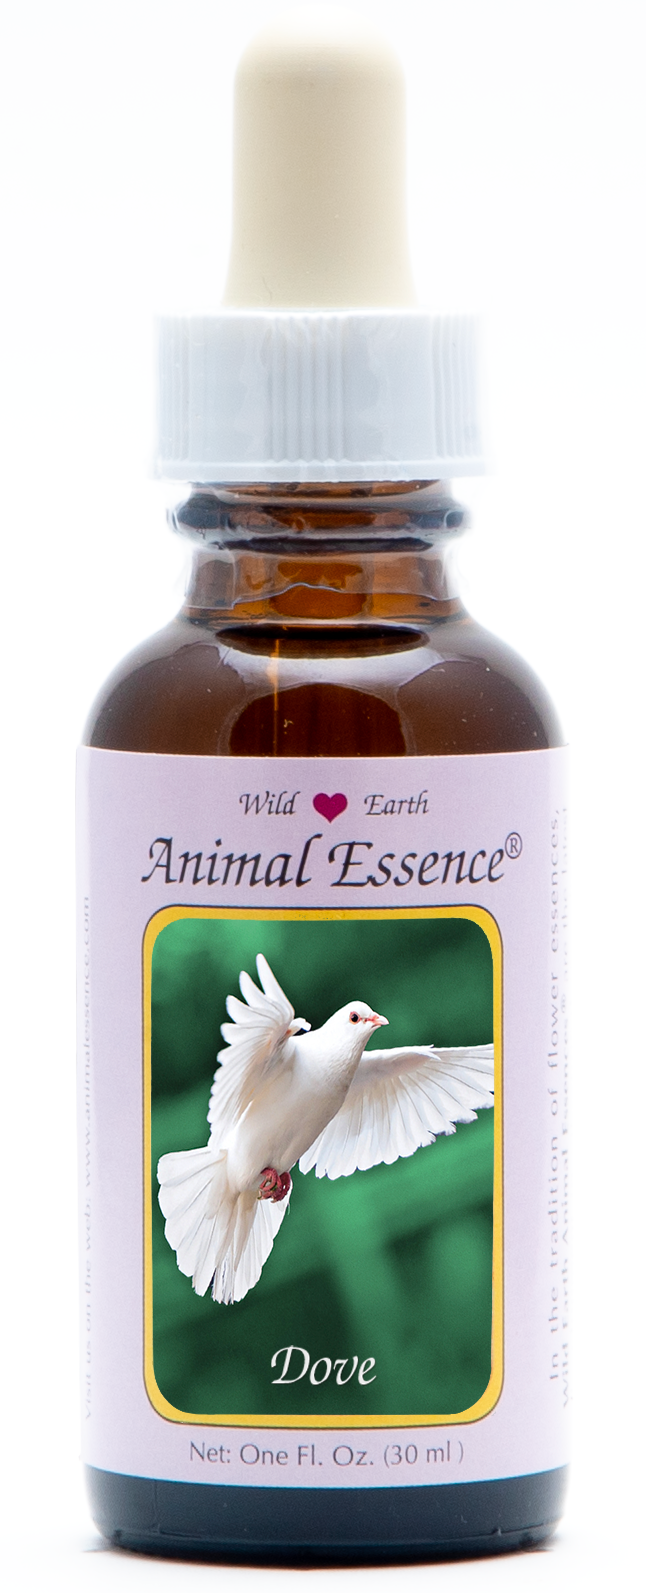 Dove animal essence 30ml